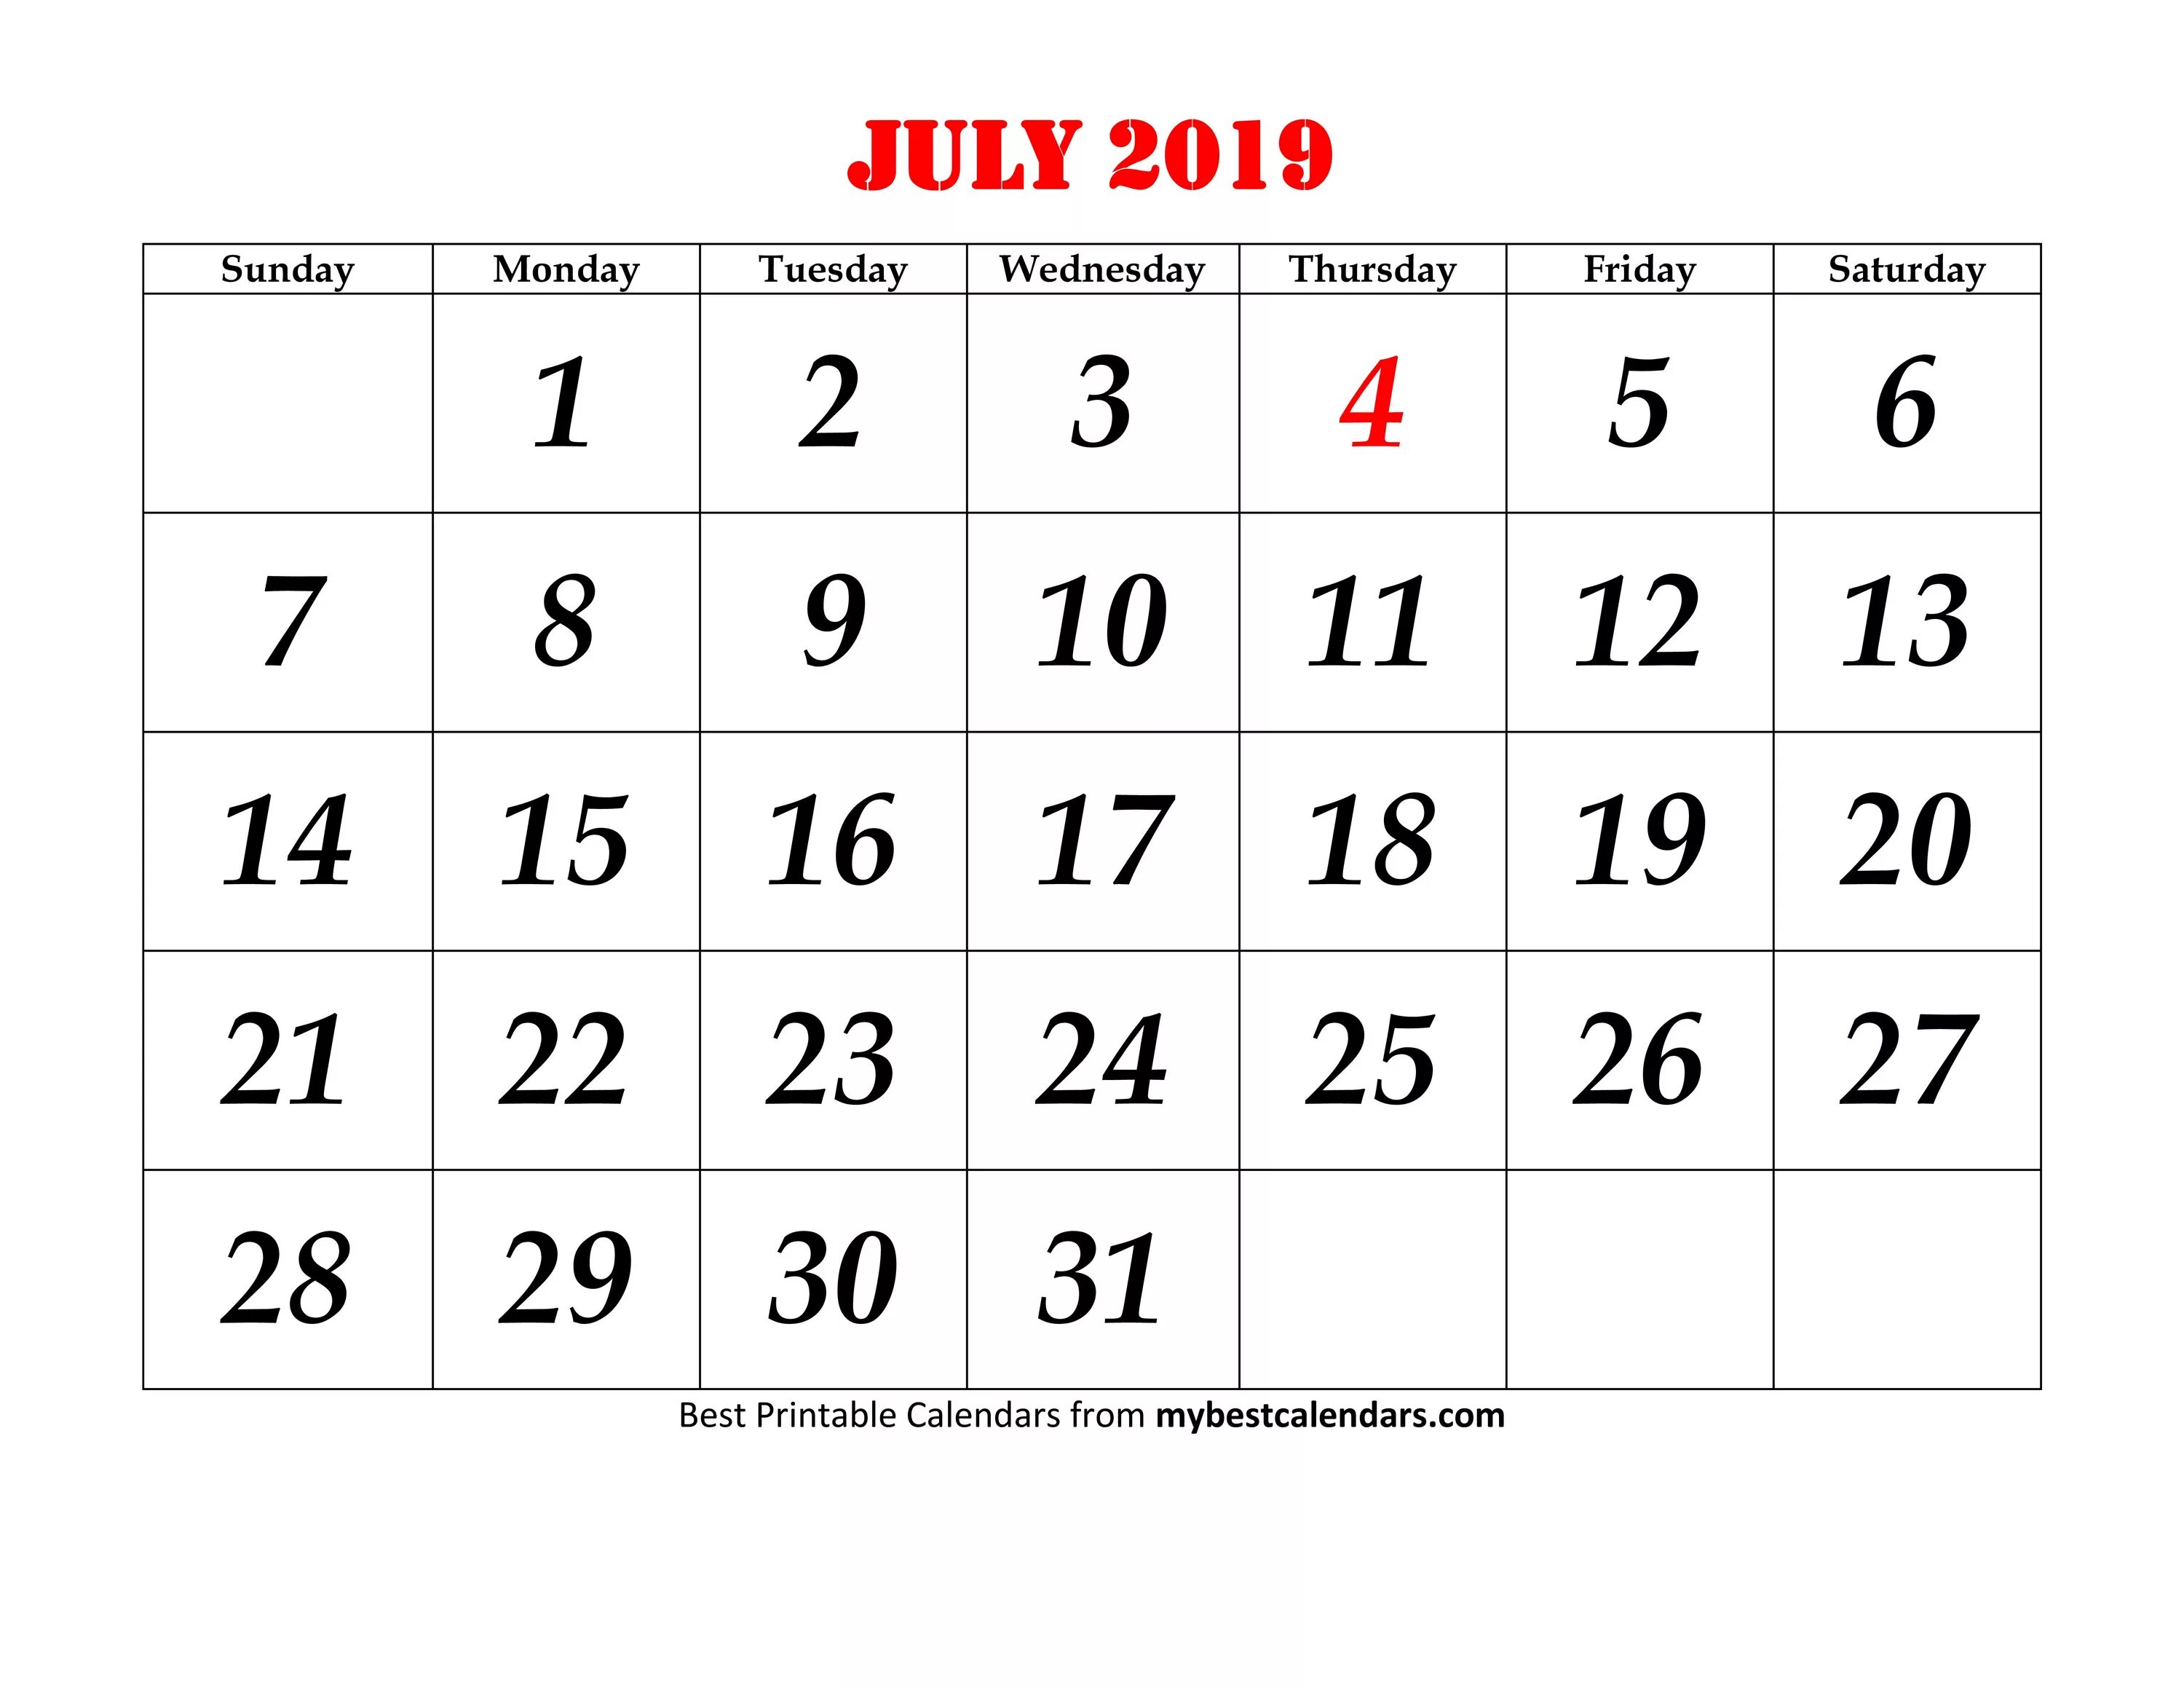 Календарь на июль месяц. Календарь июль. July Calendar. Июль 2019 календарь. Июль 2019 года календарь.